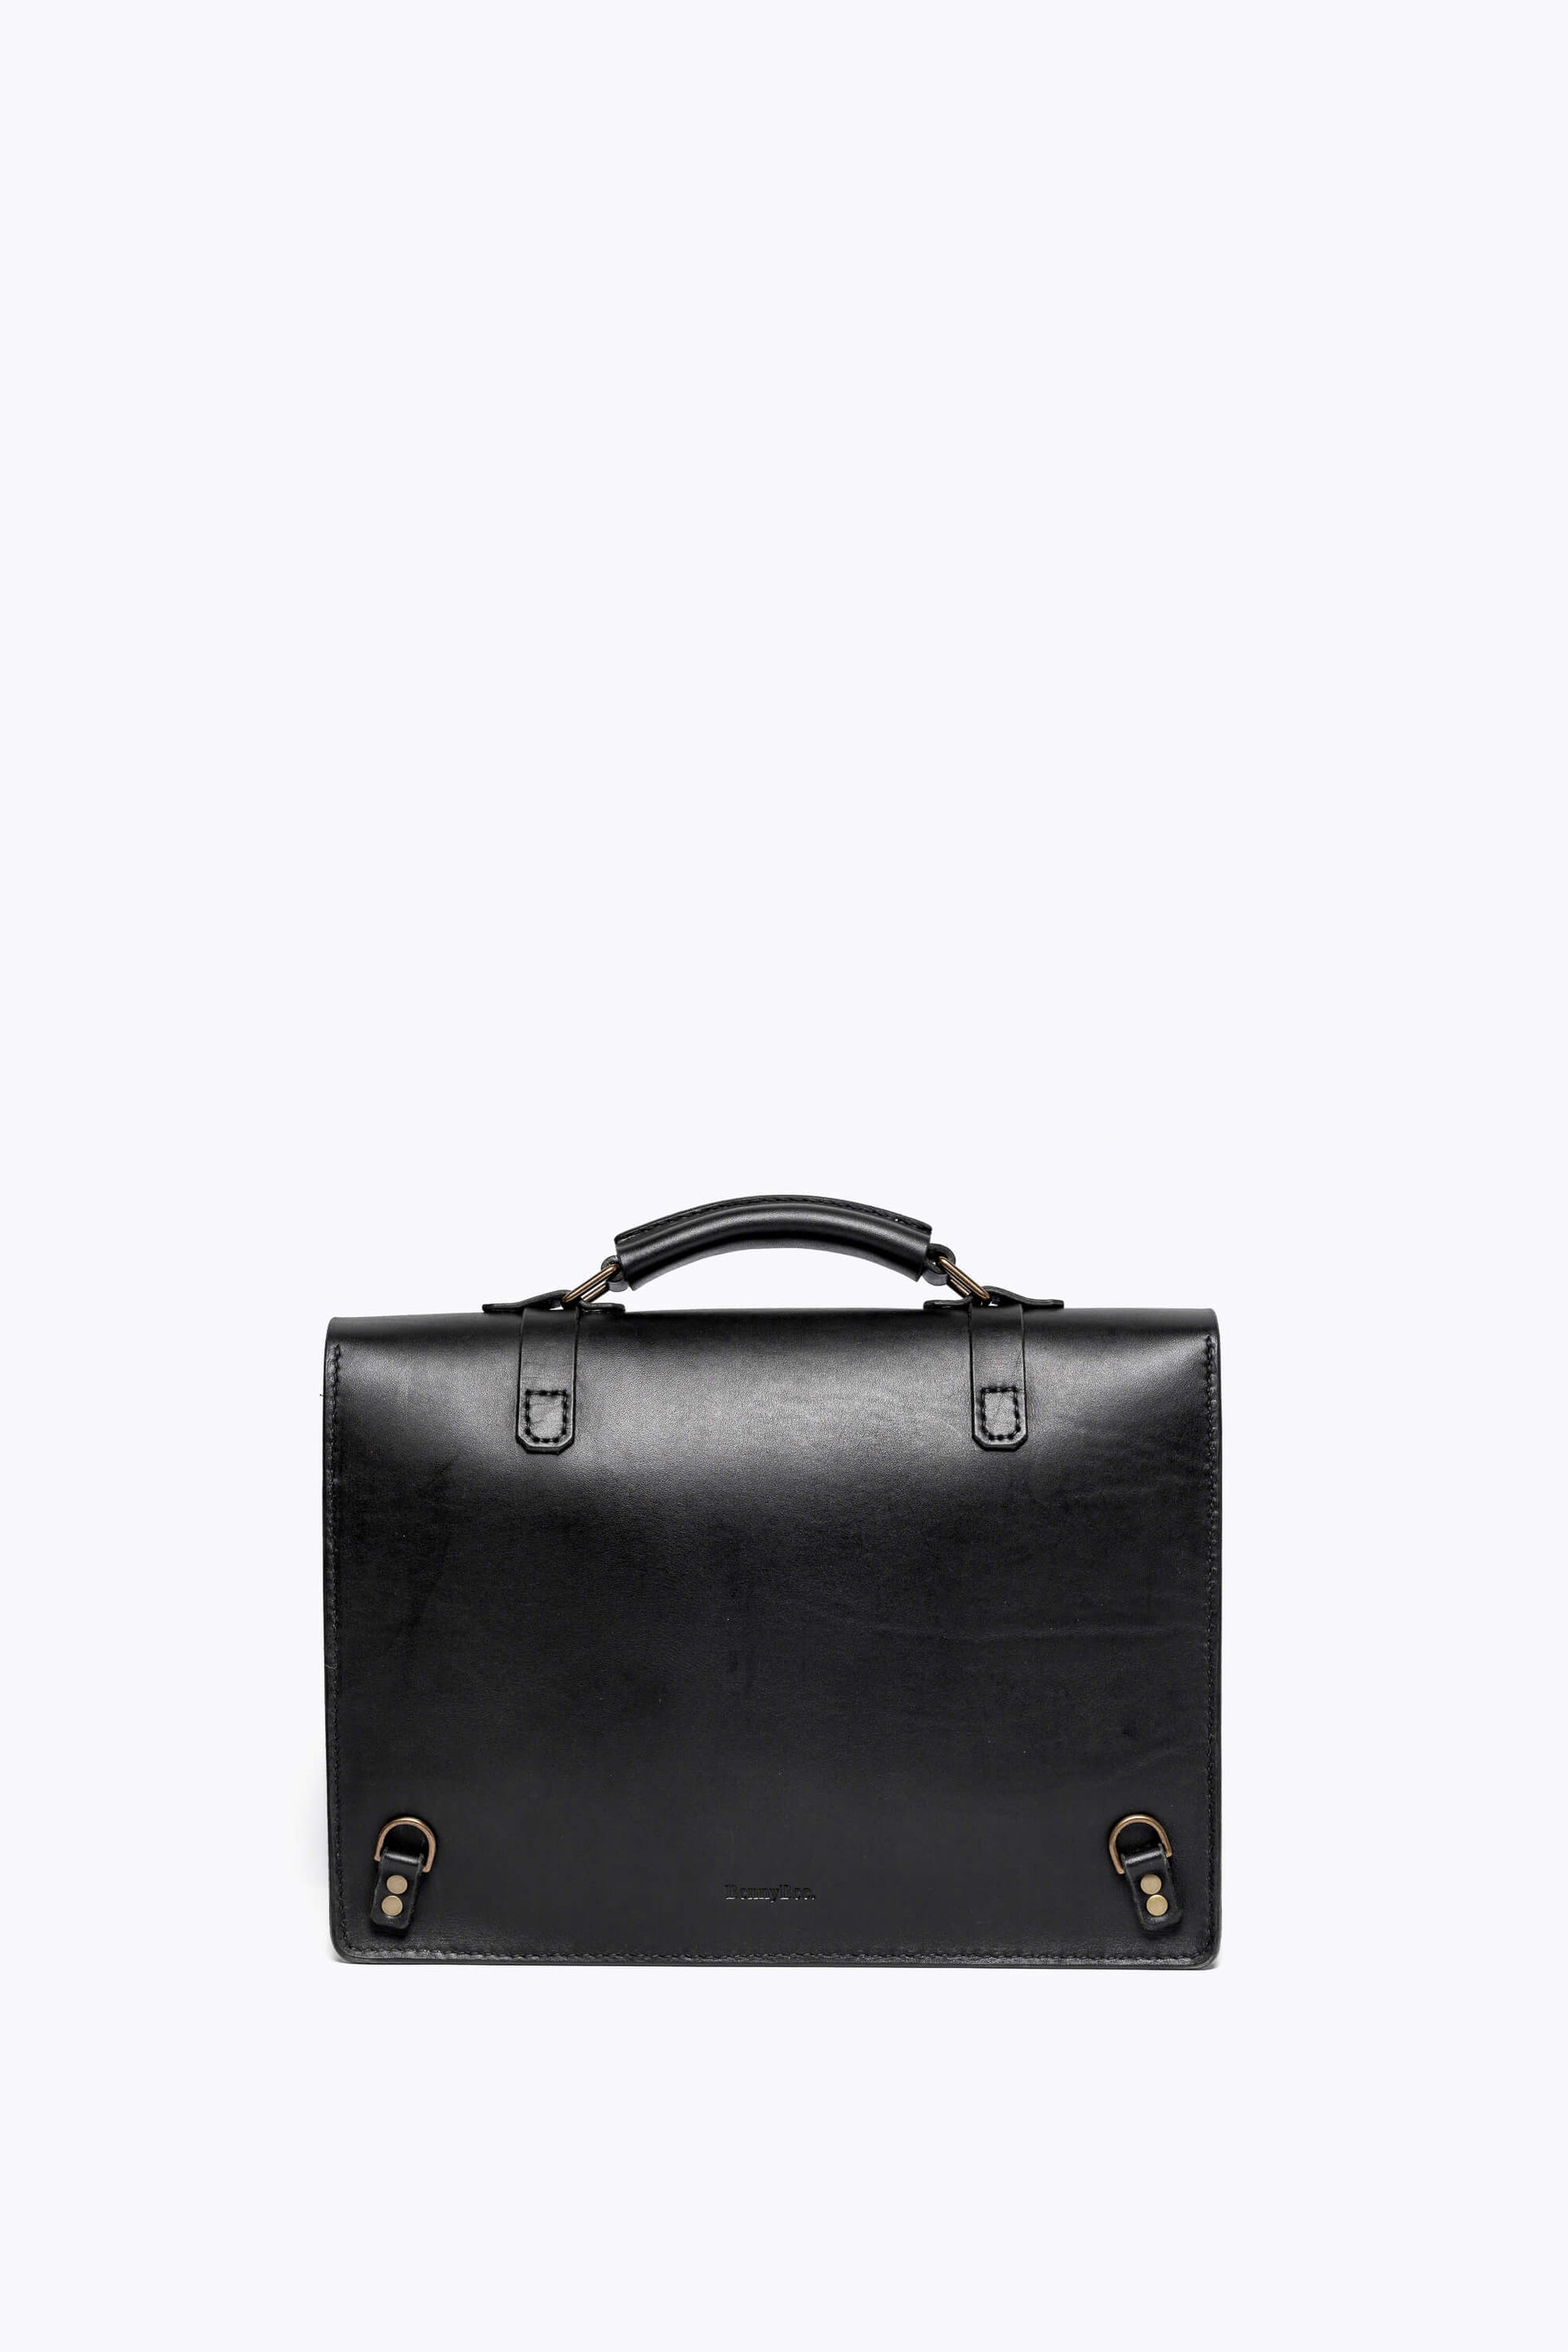 BennyBee Leather Messenger Bag 15" Black